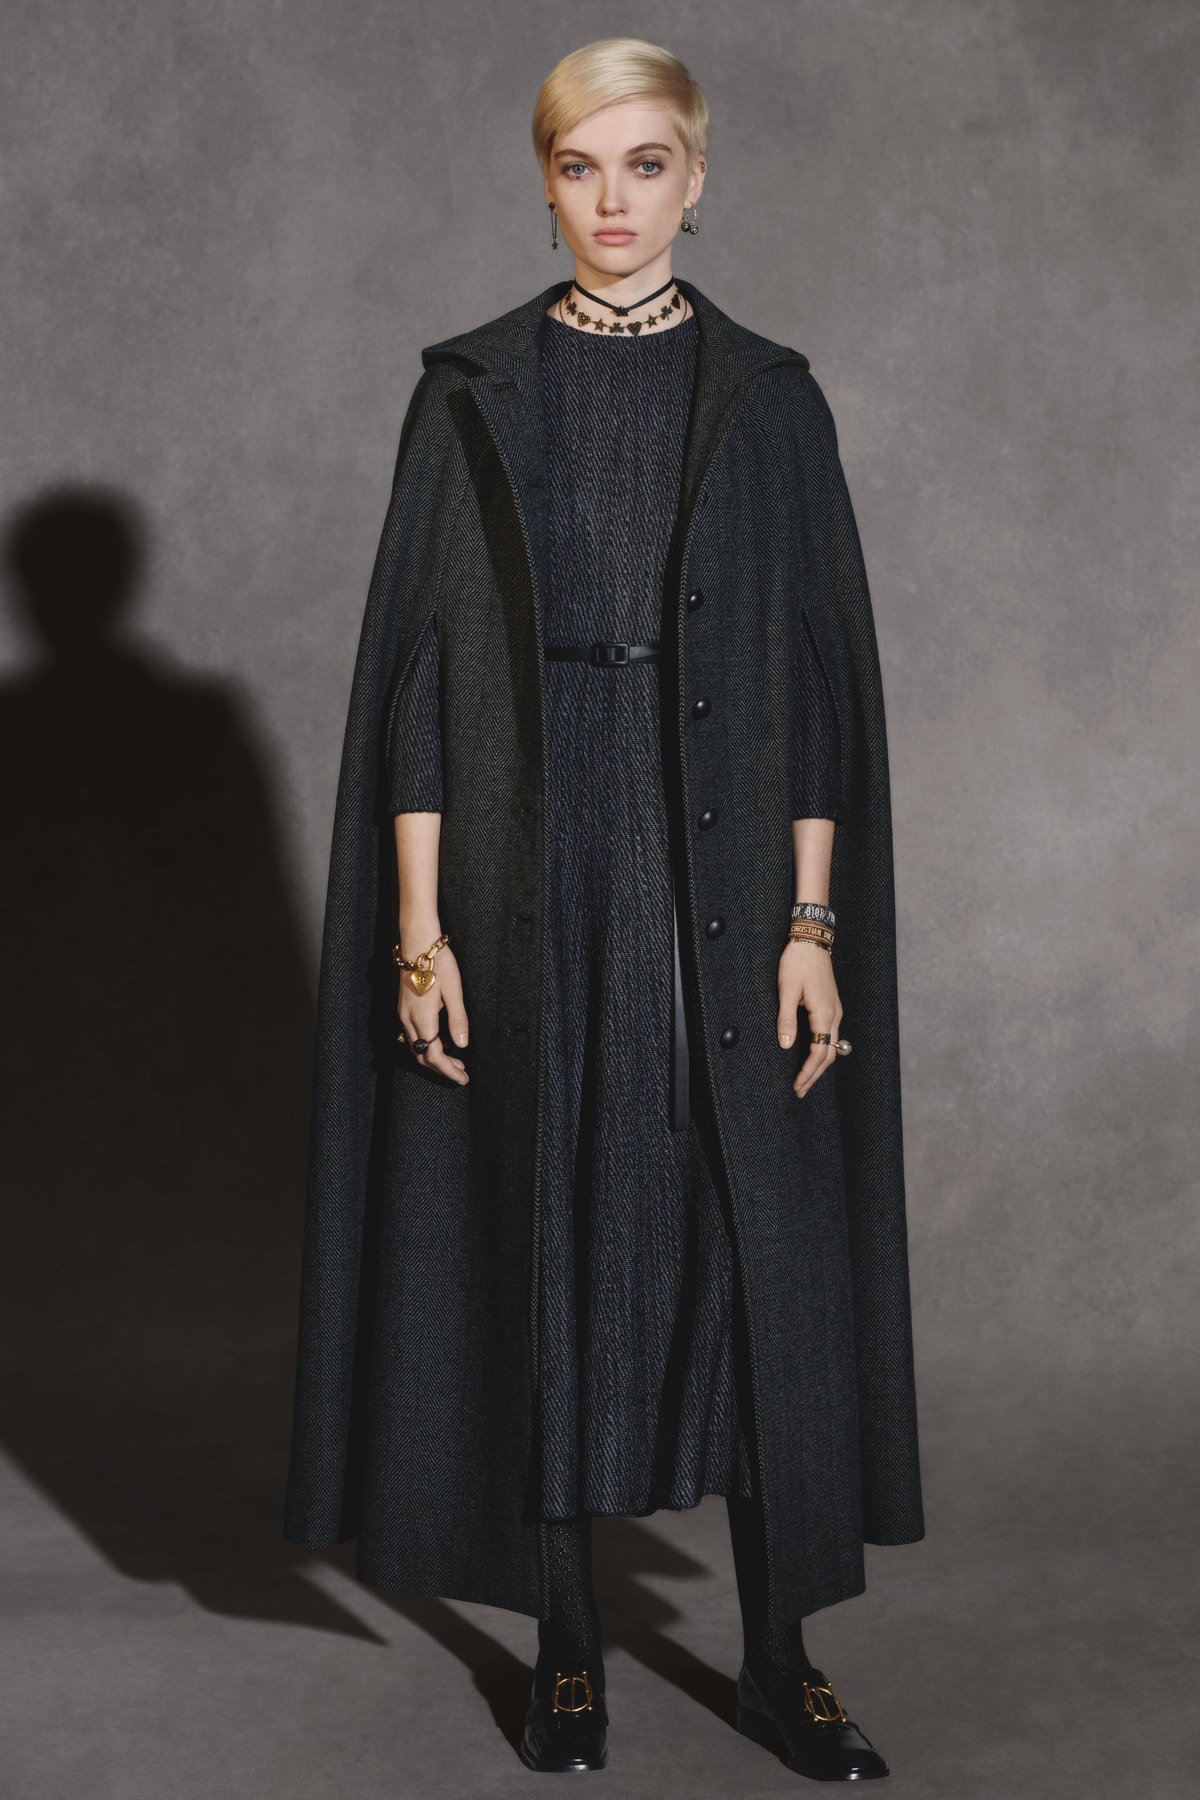 Dior Fall 2018 Collection Lookbook Oversized Tweed Coat Dress Black